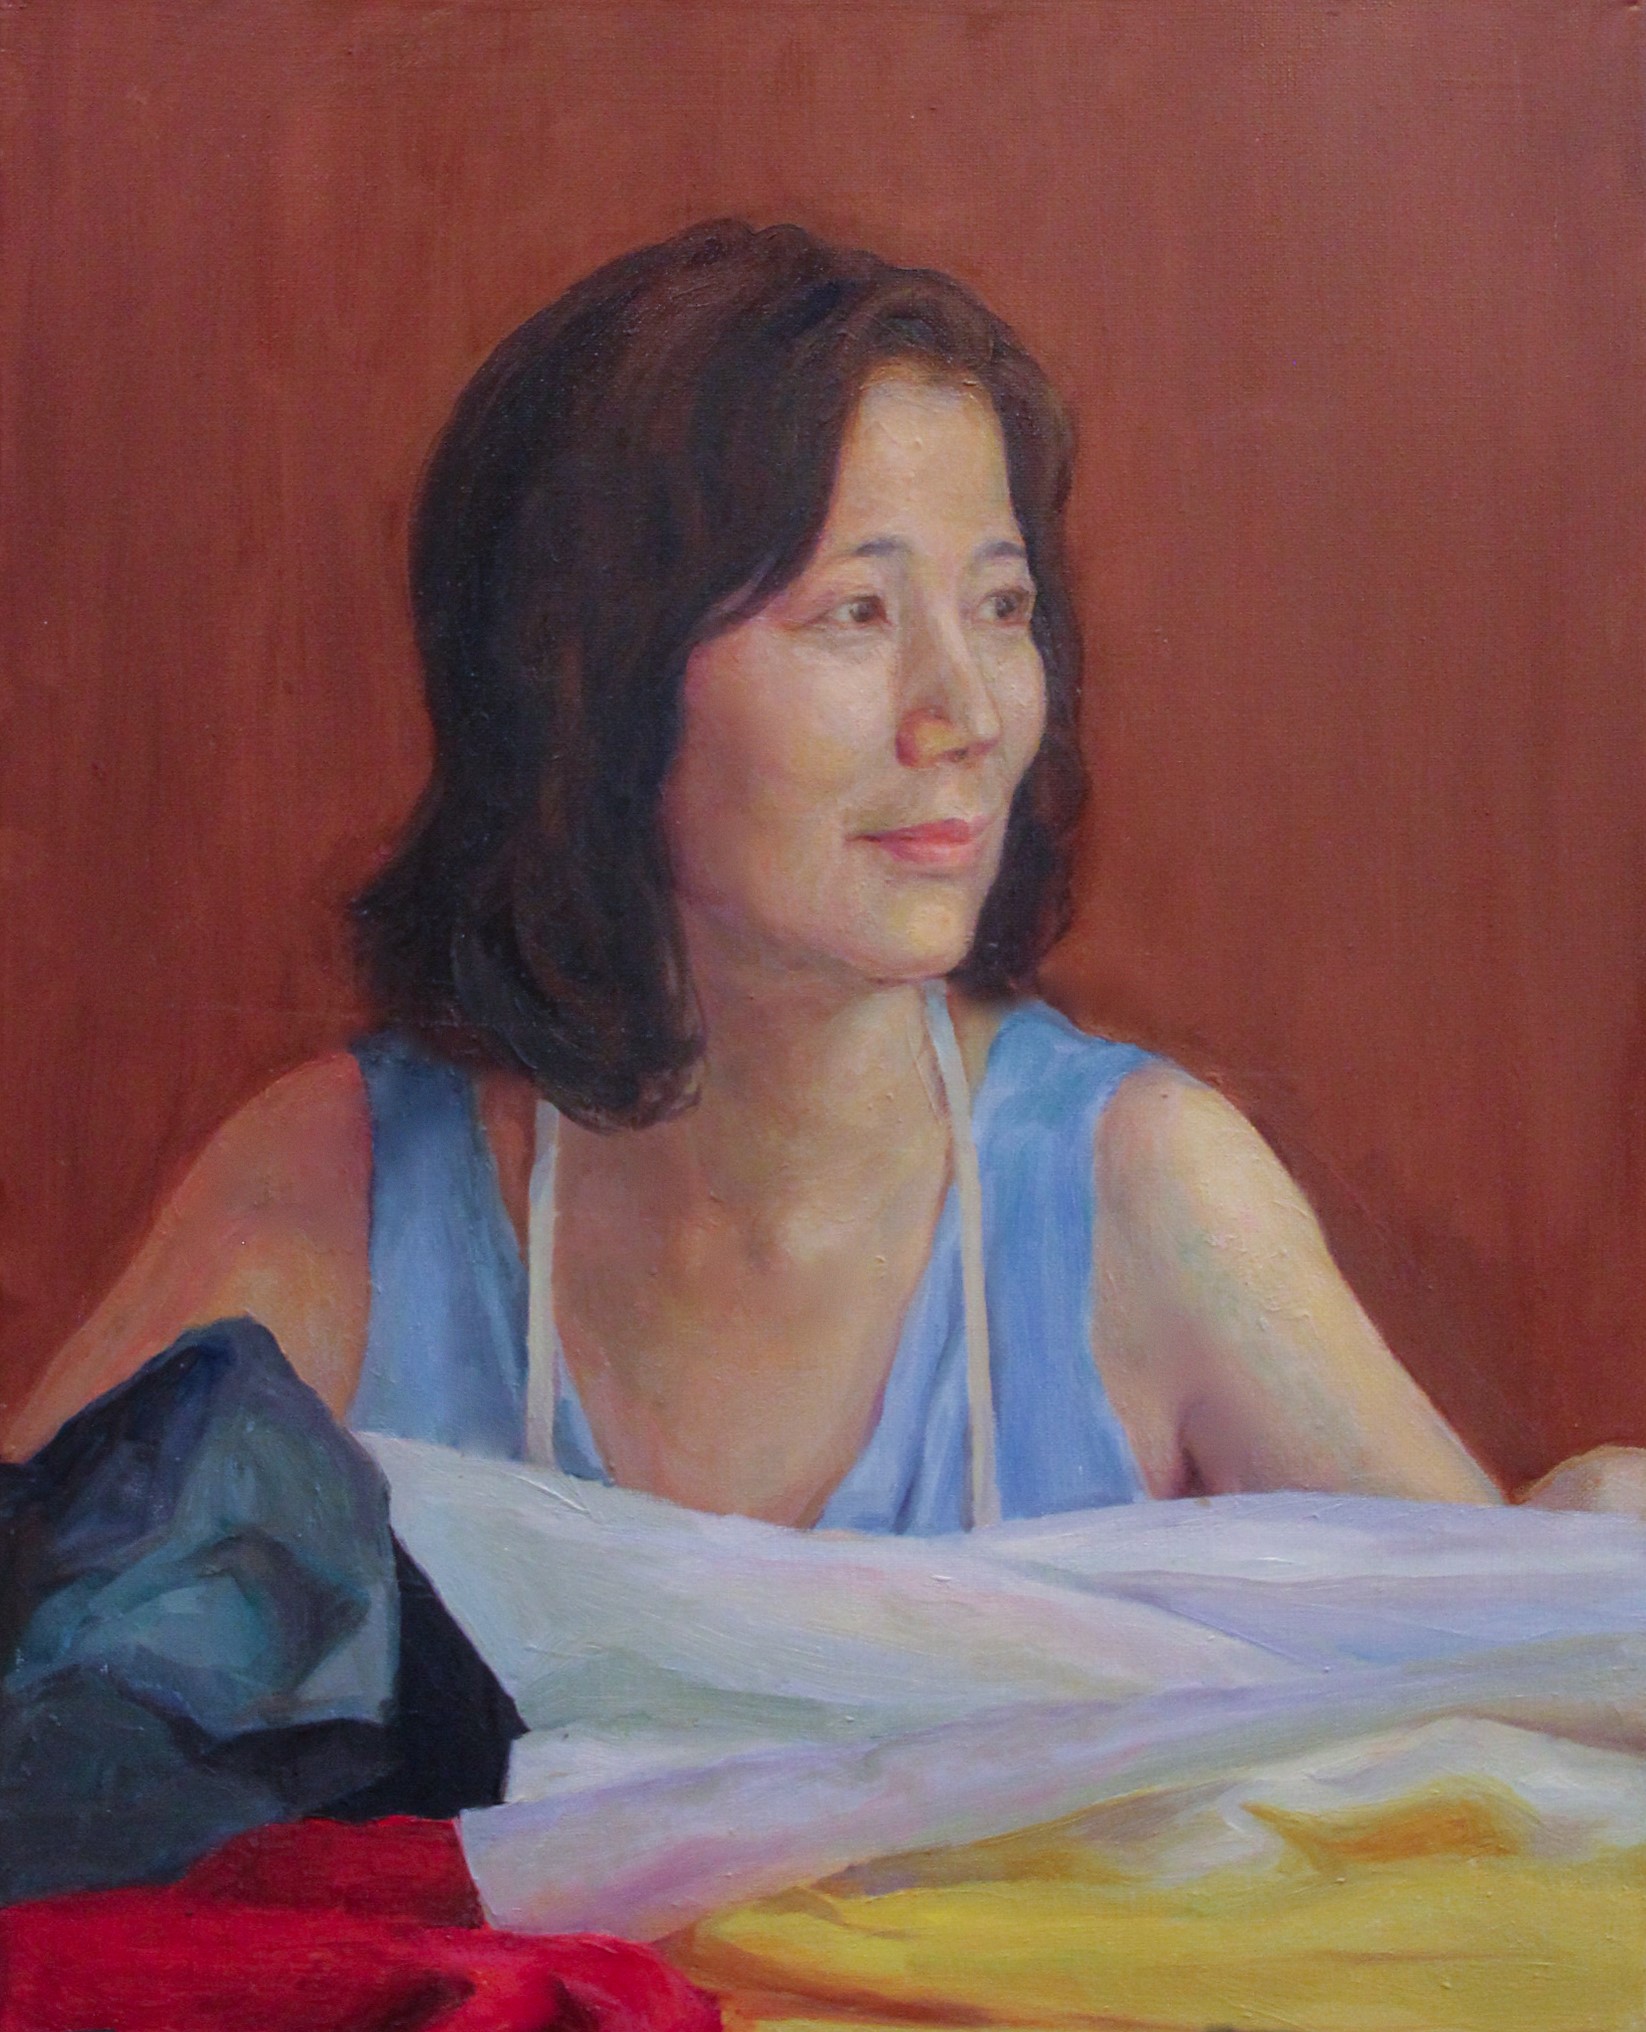 Penghui Zhang, "Portrait of Aomi" (oil on canvas)